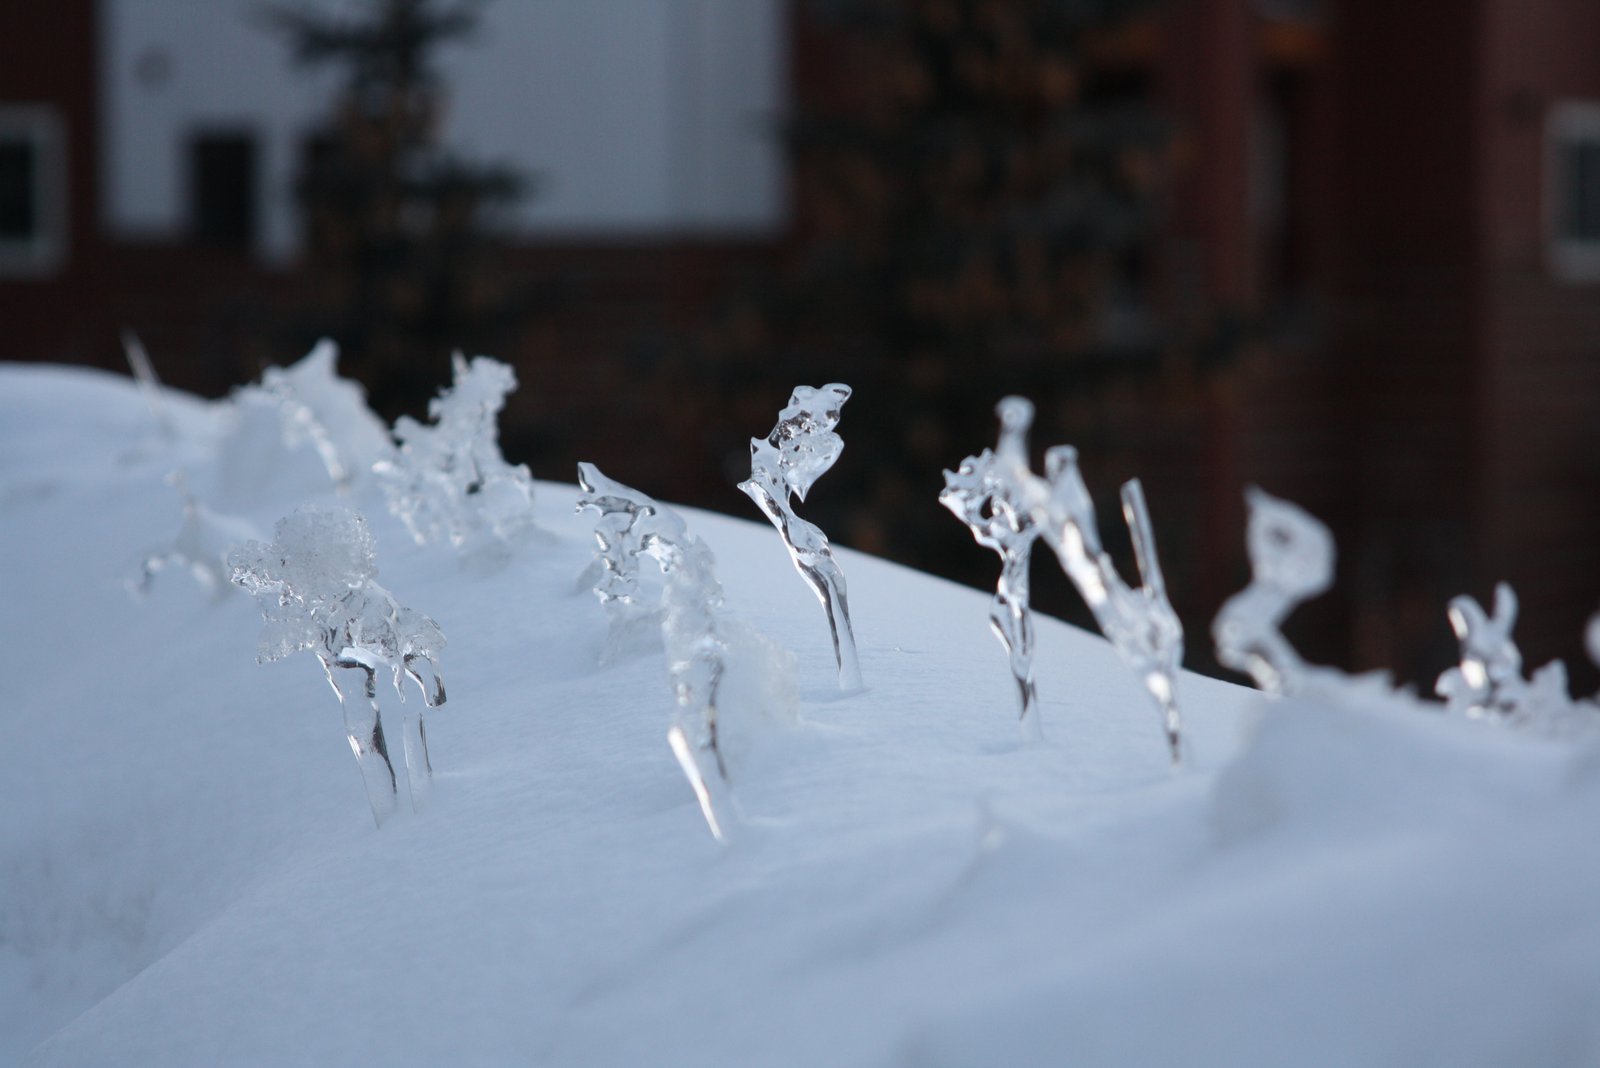 Ice figures